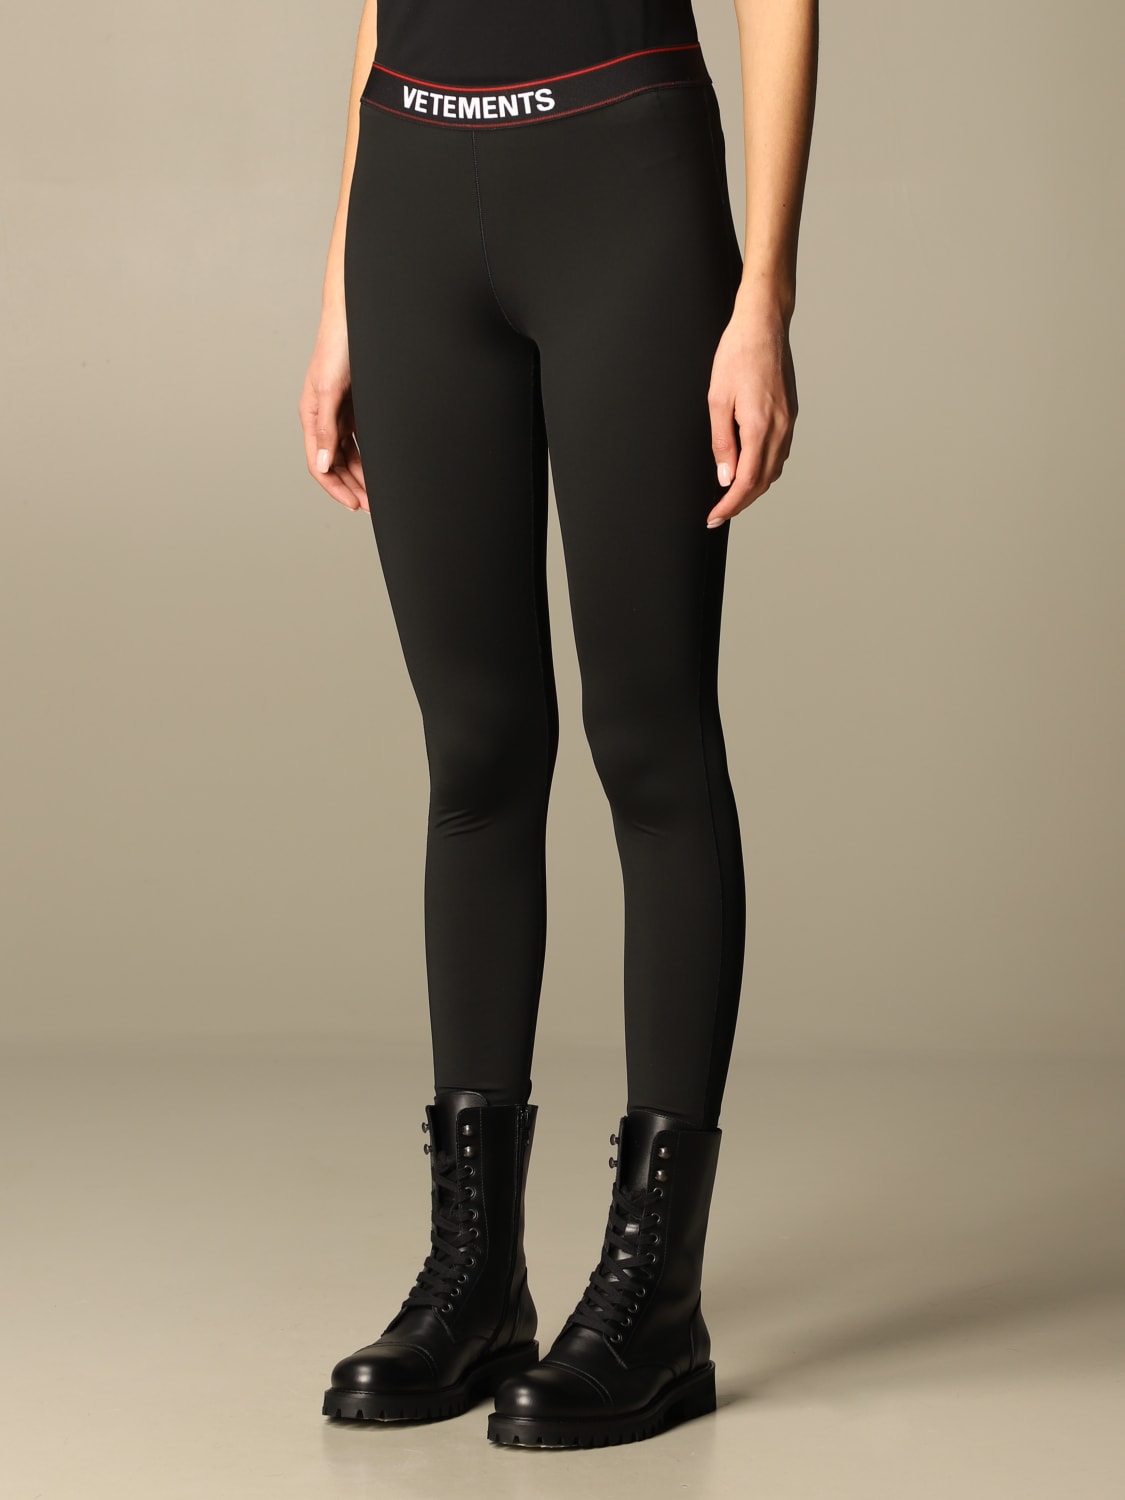 VTMNTS: Vetements stretch leggings with logo - Black  VTMNTS pantalone  WE51PA640B 1332 online at